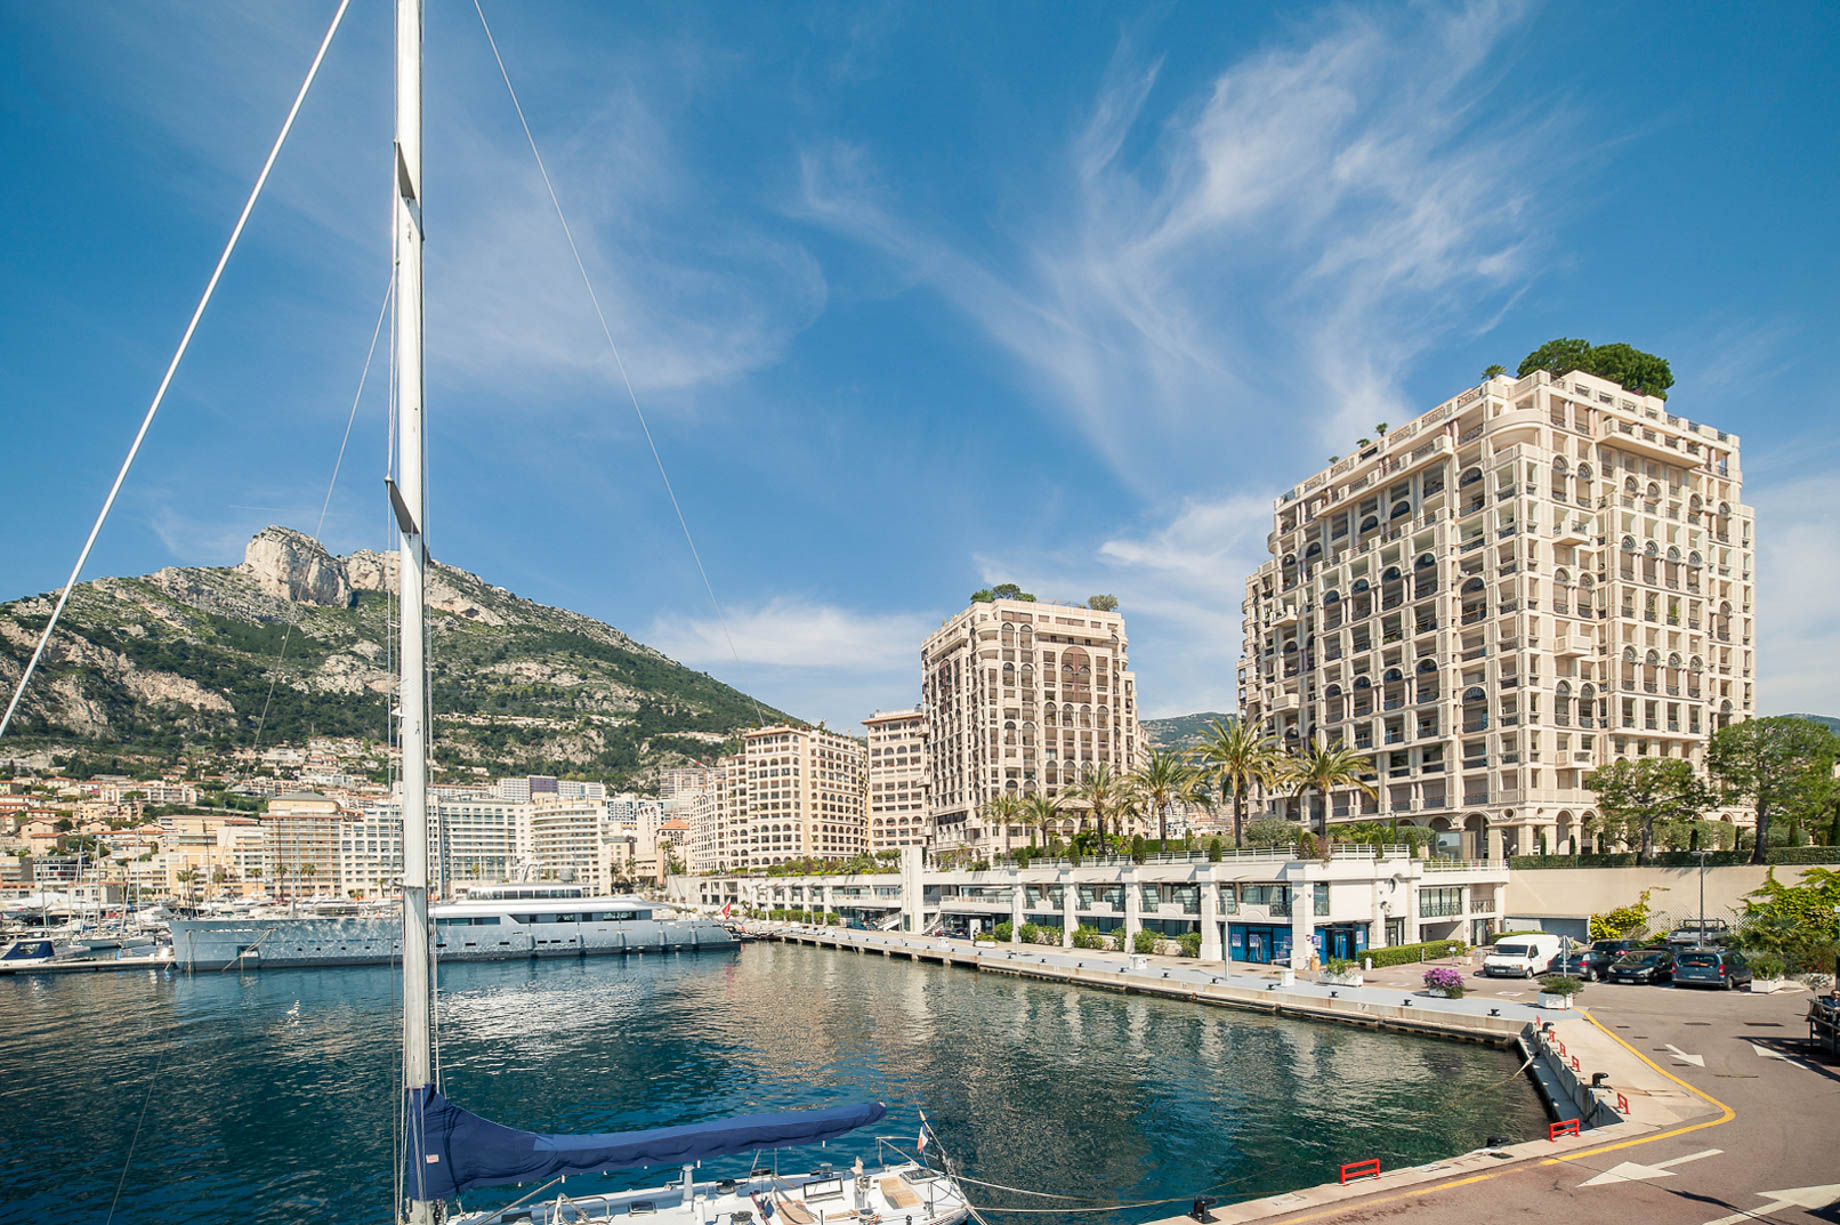 Seaside Plaza Monaco Luxury Apartment For Sale in Fontvieille, Principality of Monaco